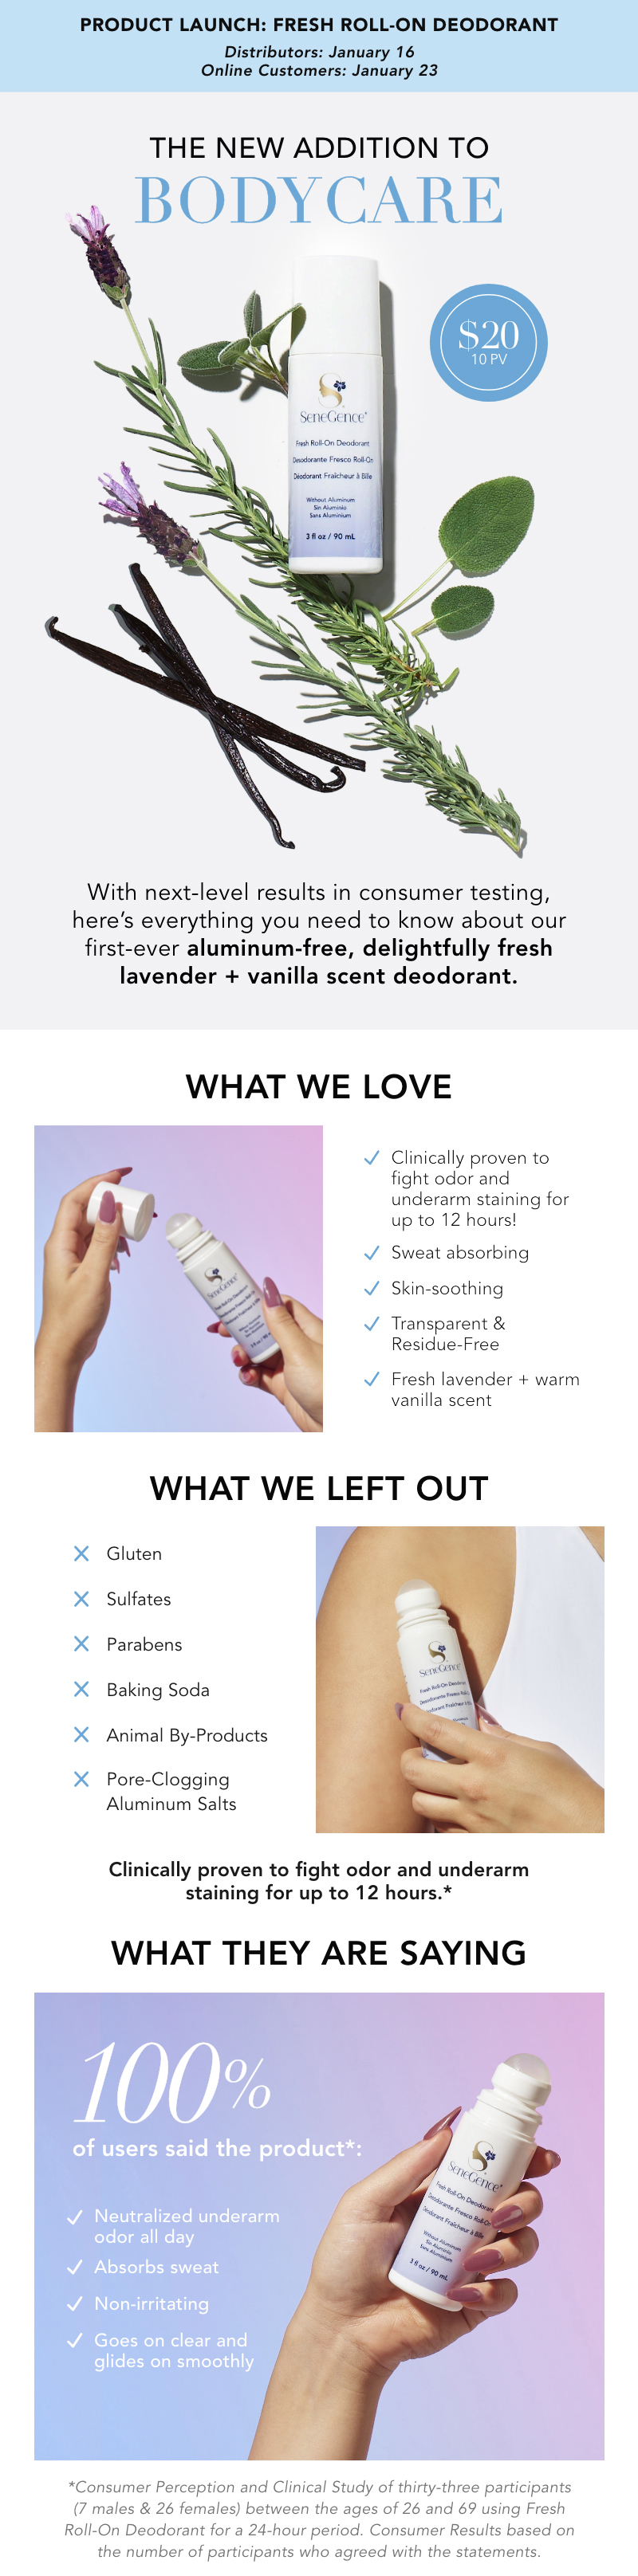 Lavender and Vanilla Deodorant